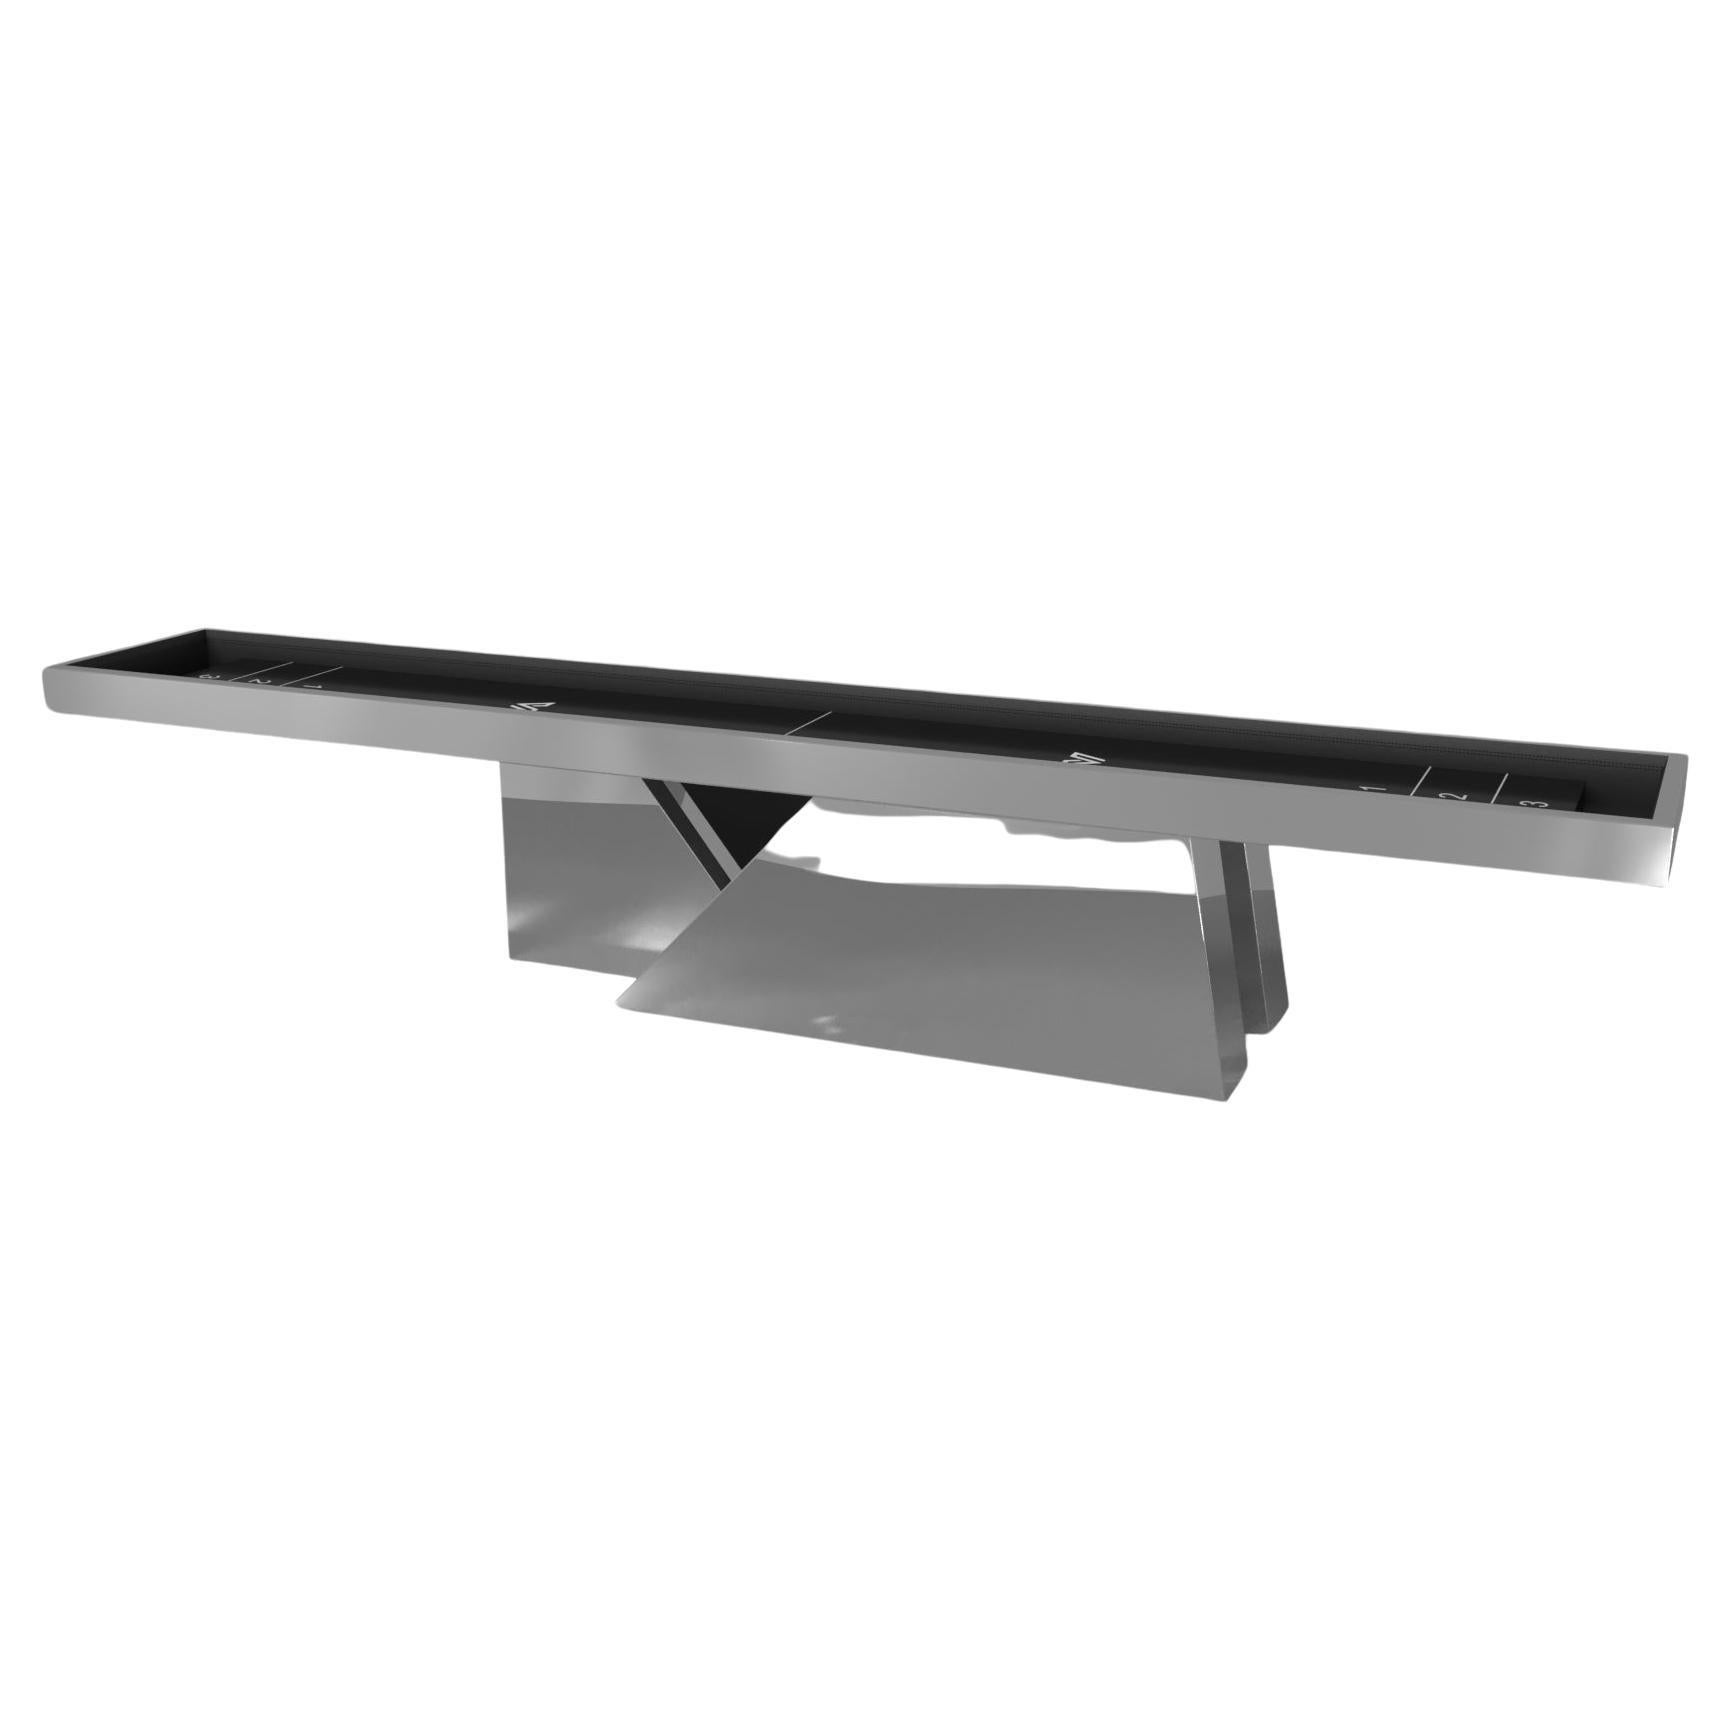 Elevate Customs Stilt Shuffleboard Tables/Stainless Steel Sheet Metal in 12'-USA